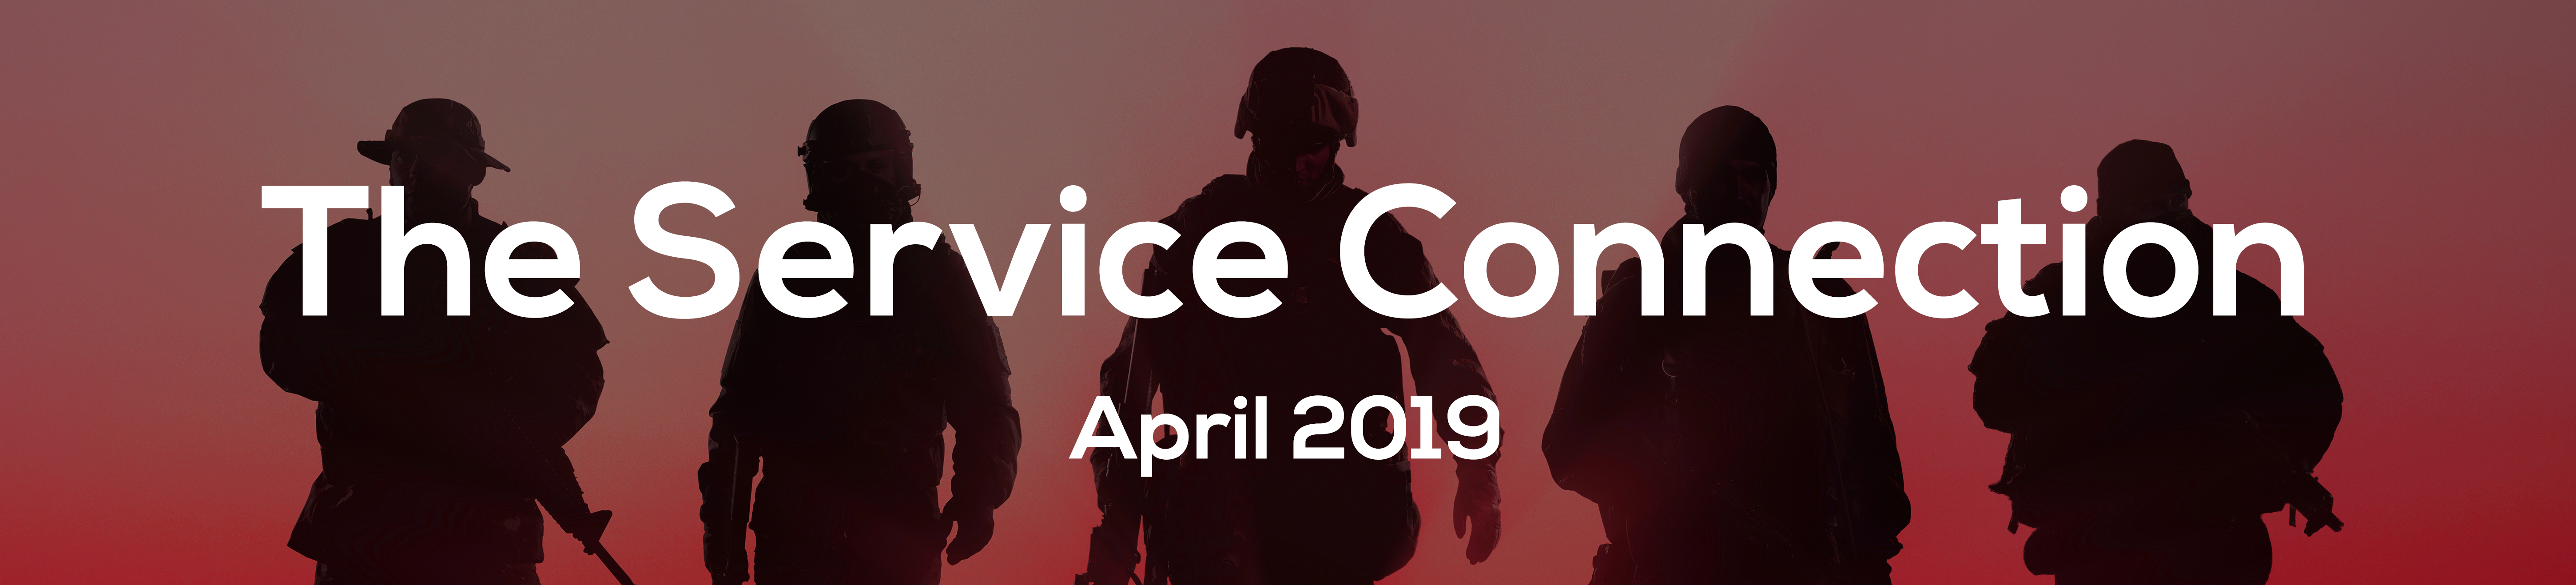 The Service Connection – April 2019